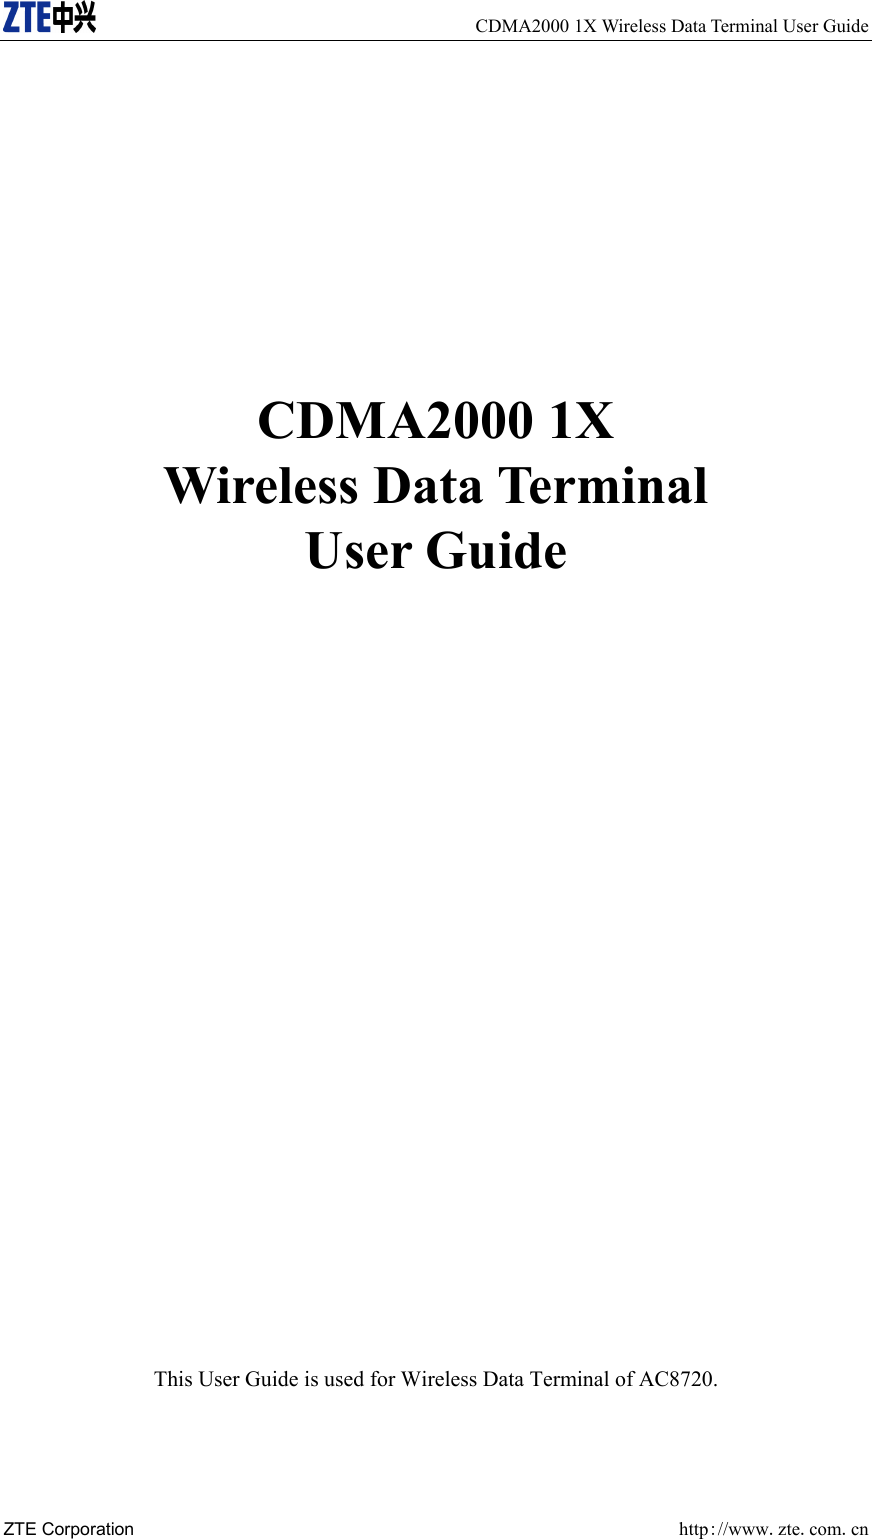     CDMA2000 1X Wireless Data Terminal User Guide ZTE Corporation  http://www.zte.com.cn        CDMA2000 1X   Wireless Data Terminal User Guide                         This User Guide is used for Wireless Data Terminal of AC8720. 